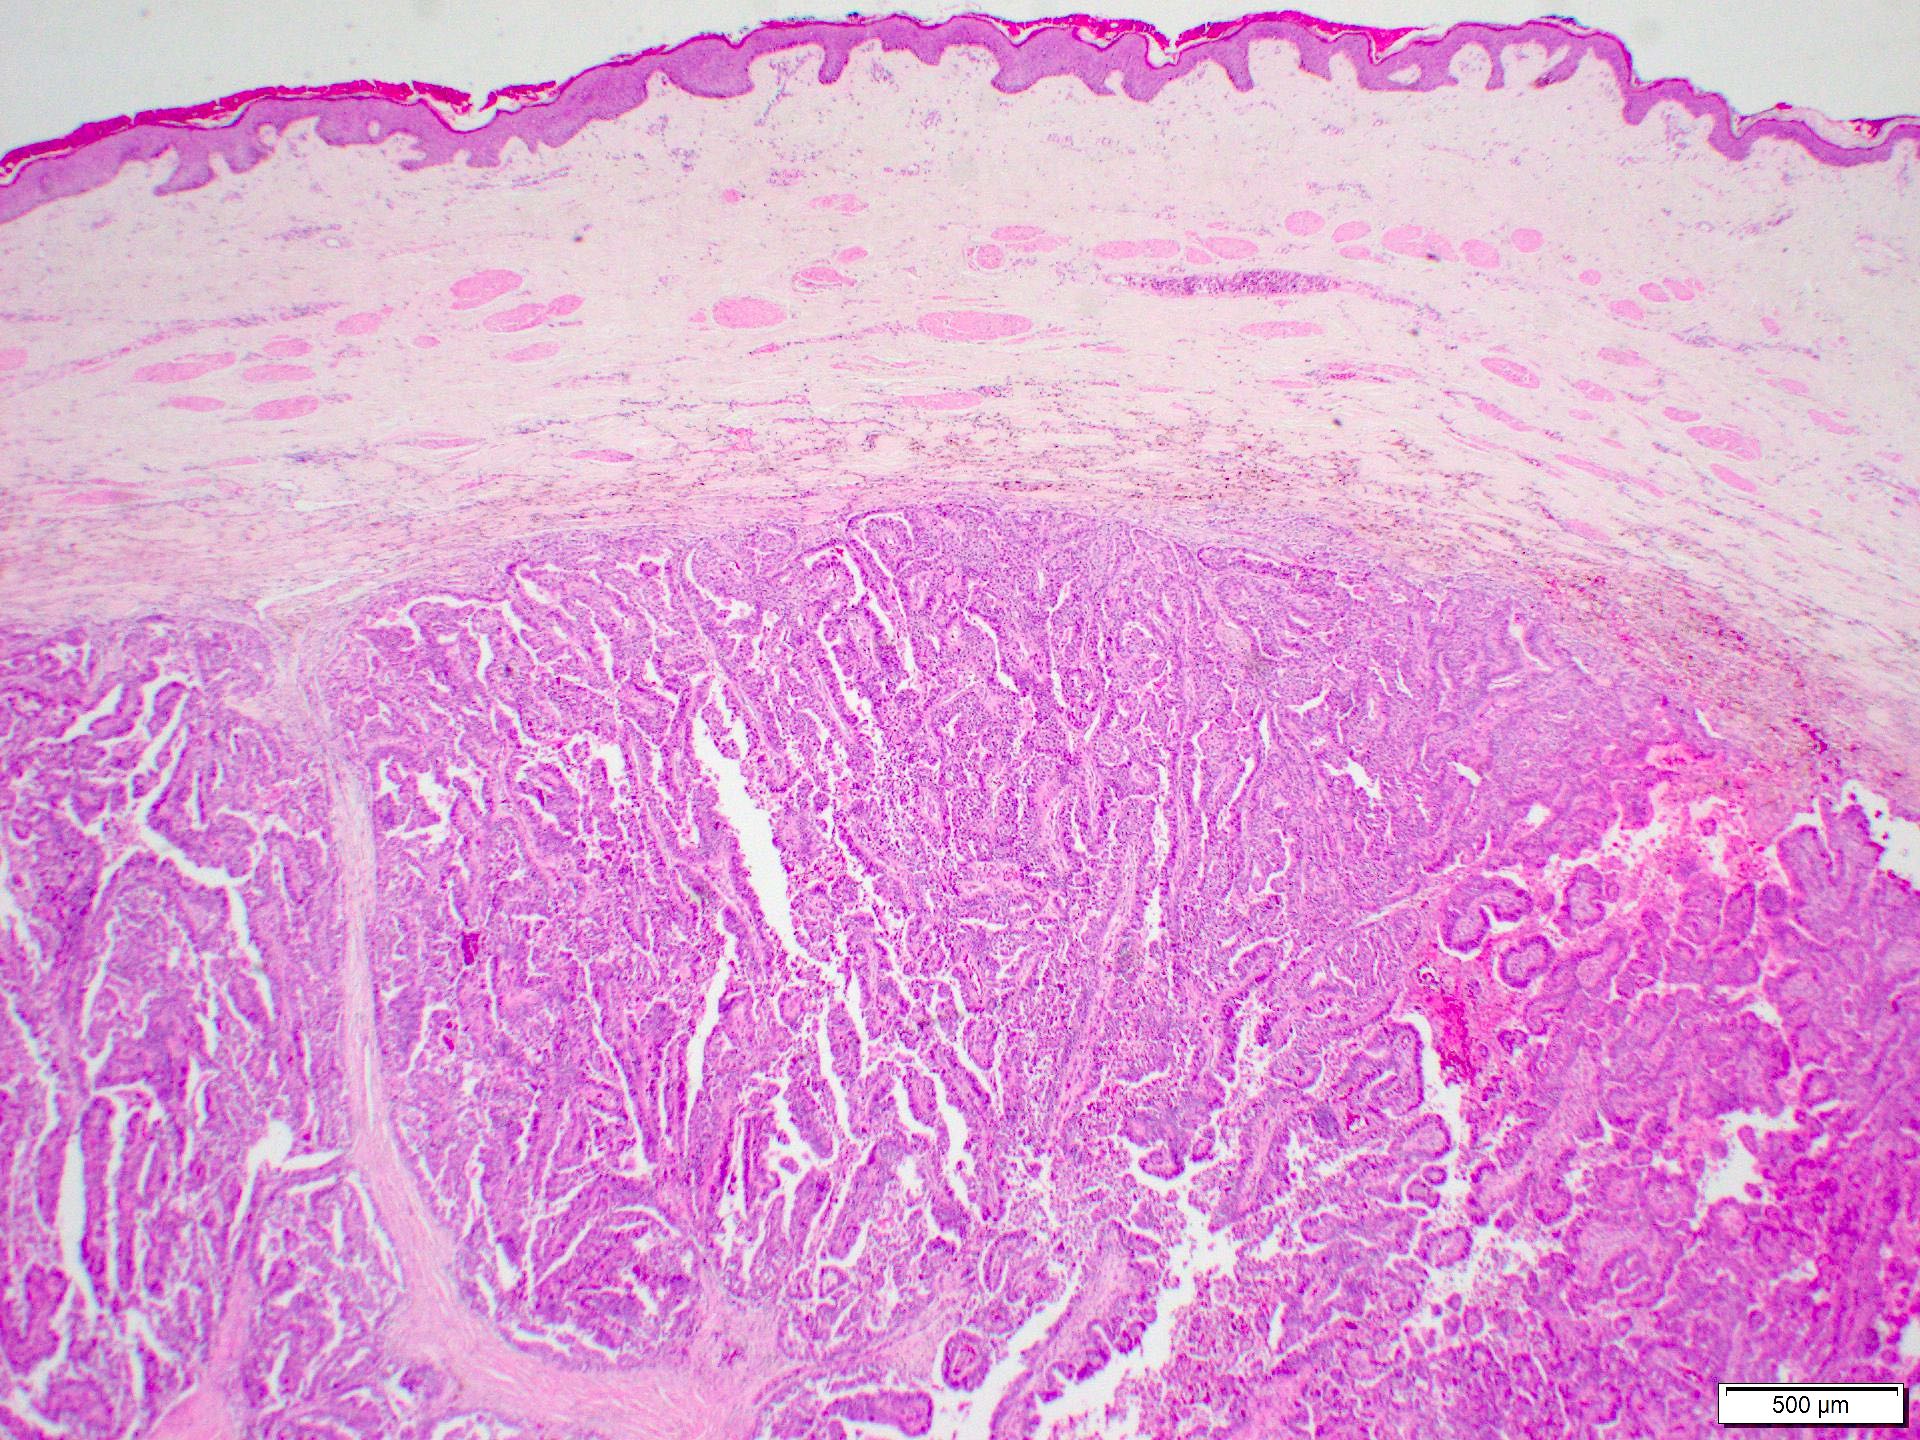 Invasive papillary carcinoma